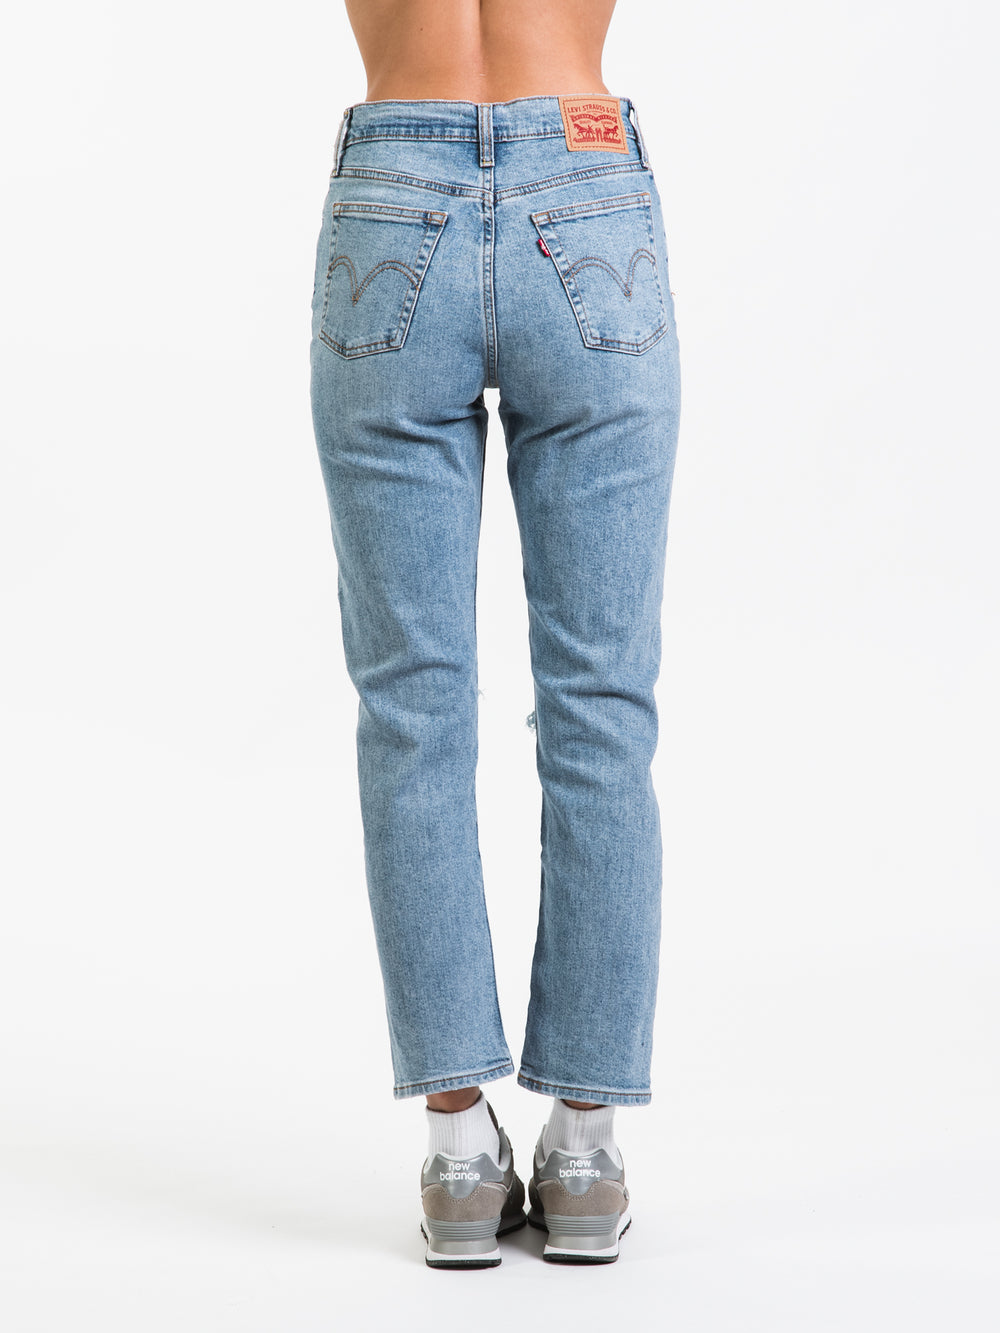 Levi's Women's Plus-Size Wedgie Straight Jean 